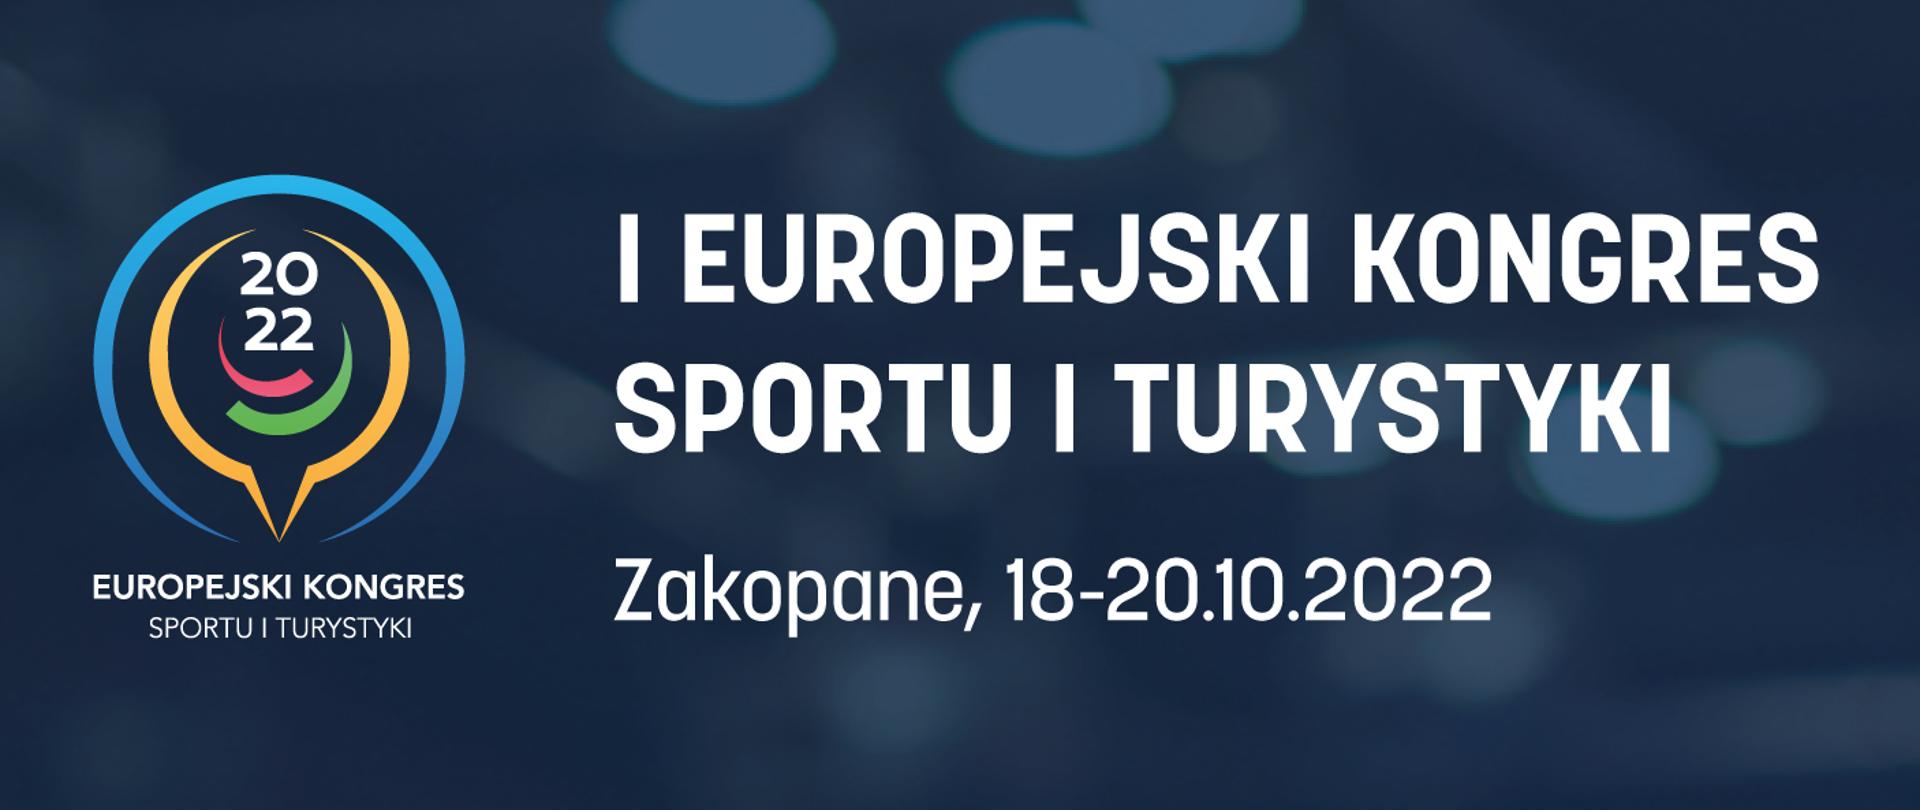 Grafika z napisem: I Europejski Kongres Sportu i Turystyki Zakopane, 18-20.2022 r. i logotypem kongresu